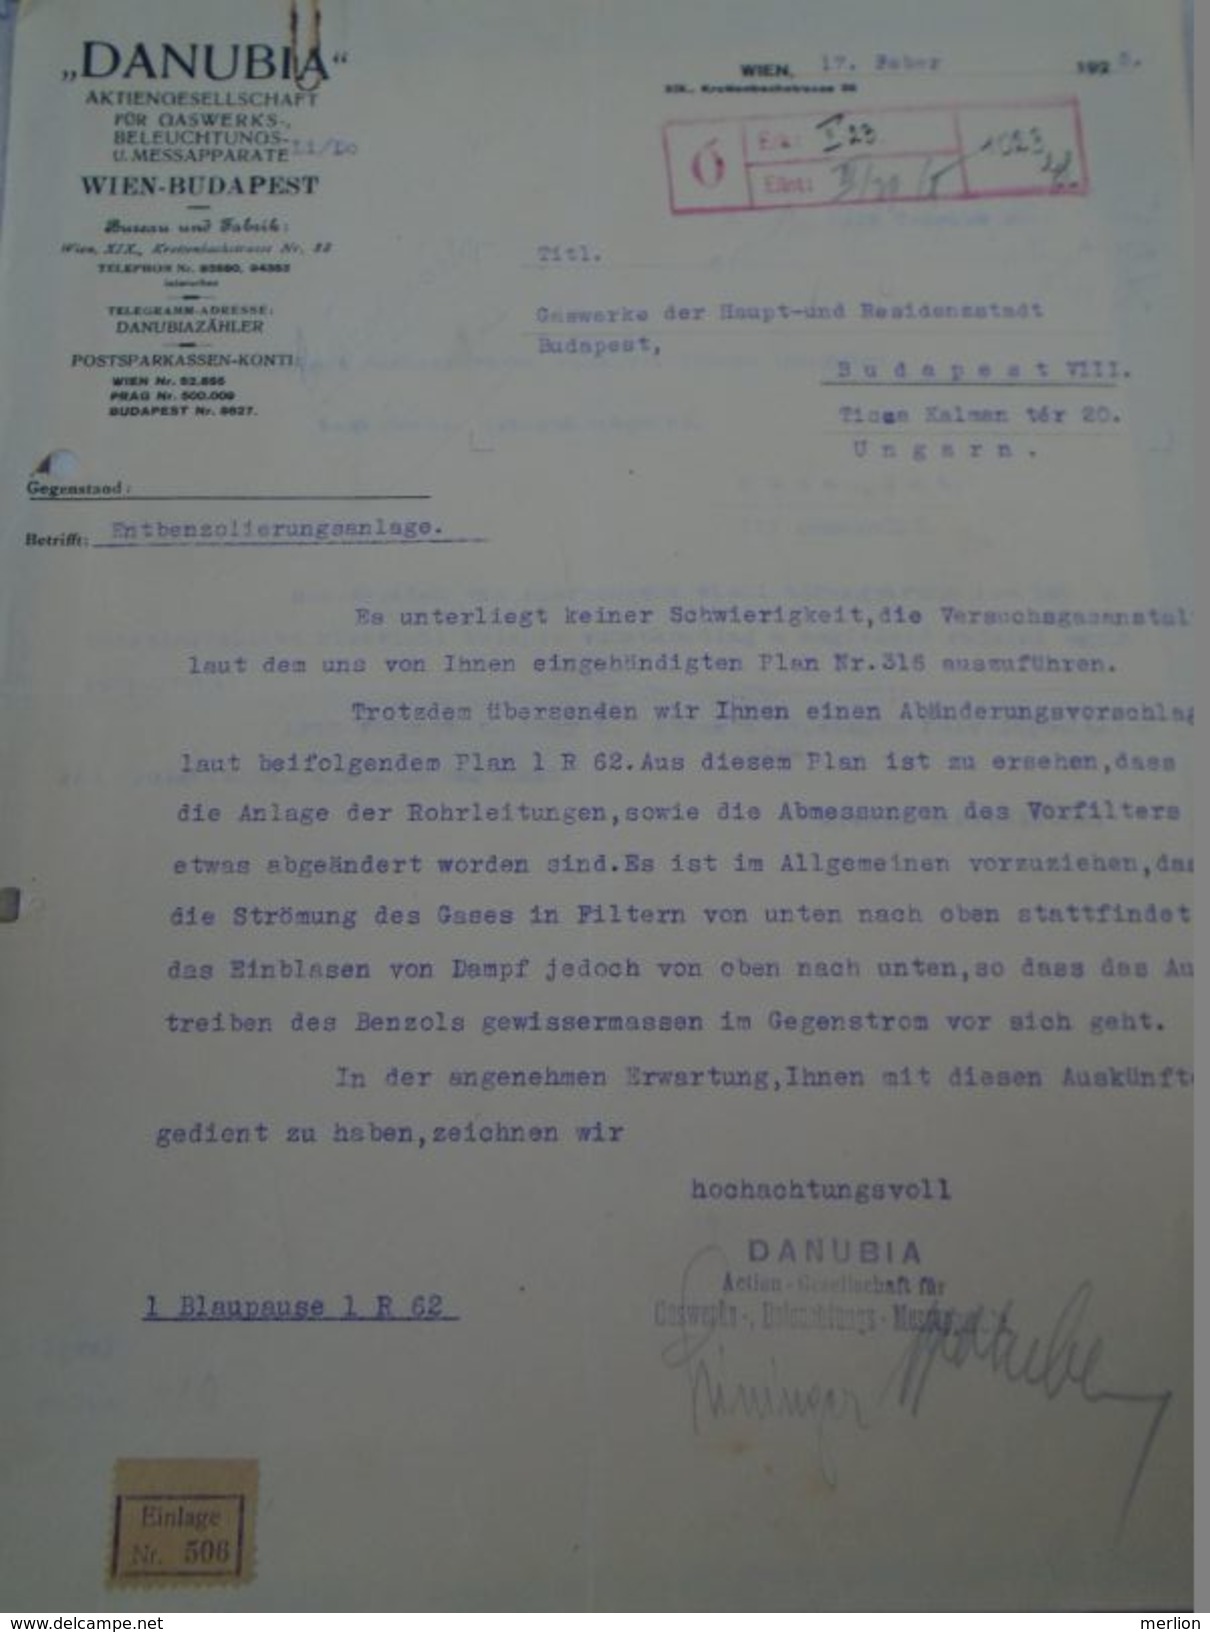 AD036.22 Old Letter   Austria -DANUBIA -WIEN-BUDAPEST -GASWERKS -1925 -Gaswerke Budapest - Austria